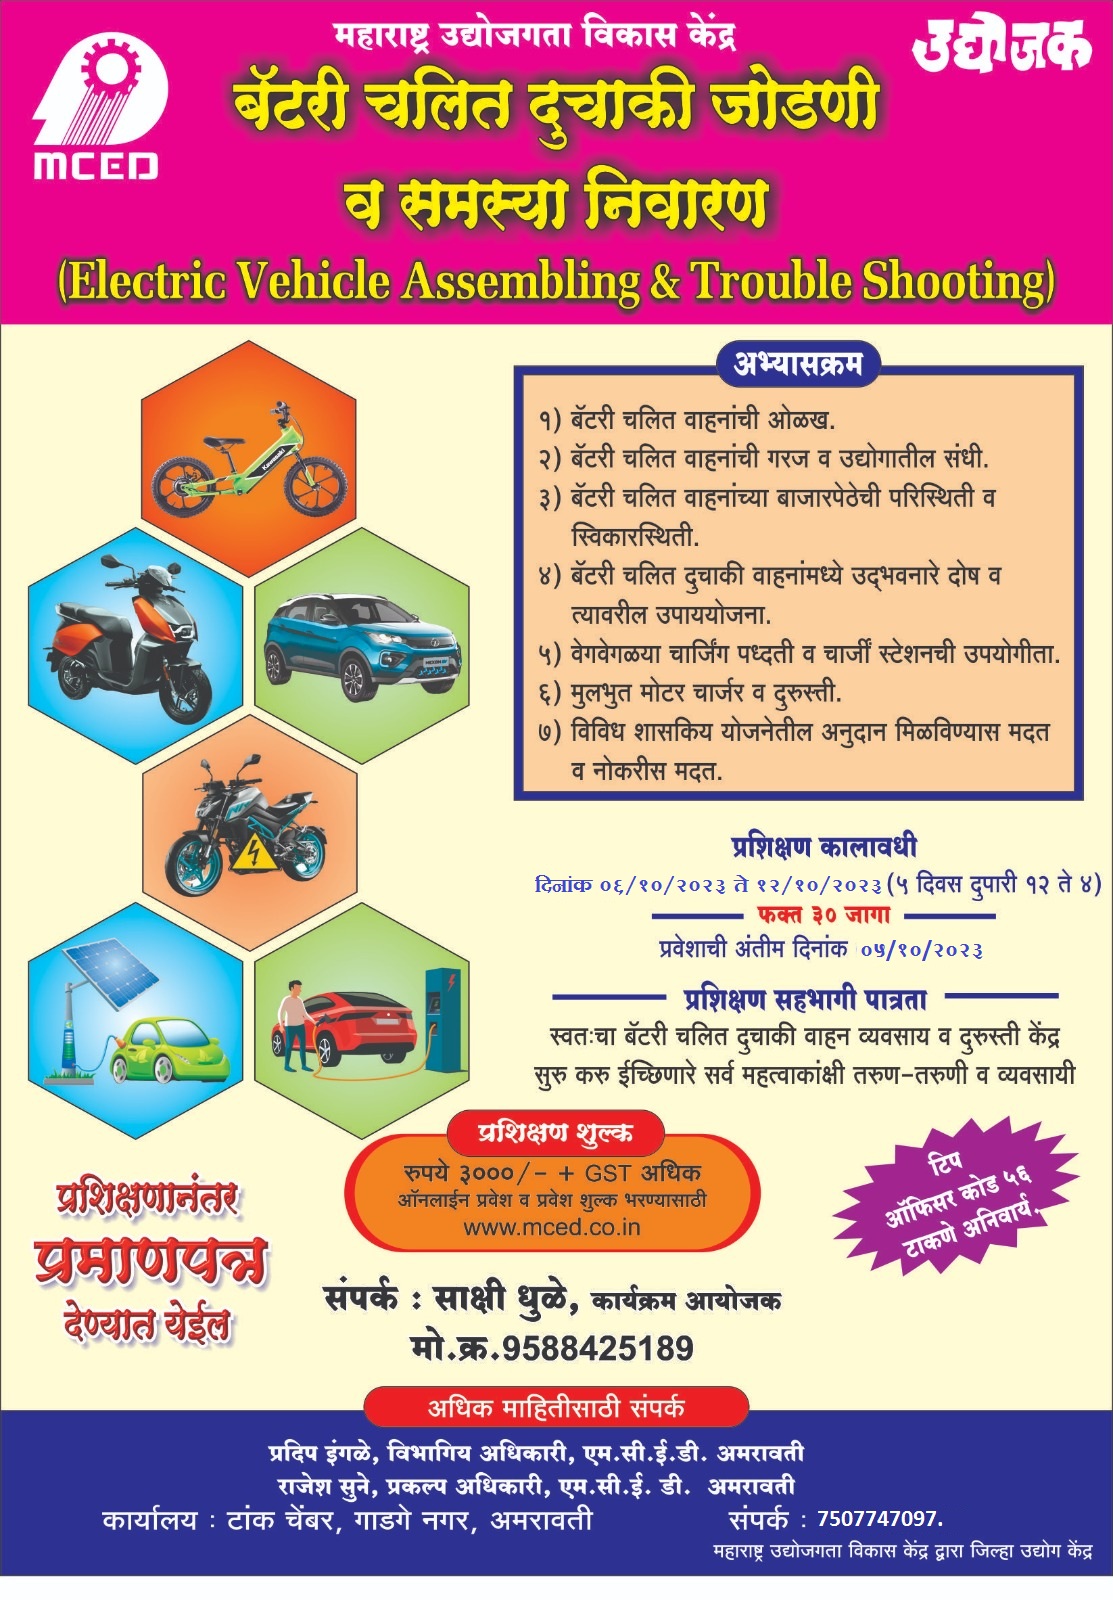 Electric Vehicle Assembling & Trouble Shooting Training Programme, Amravati.